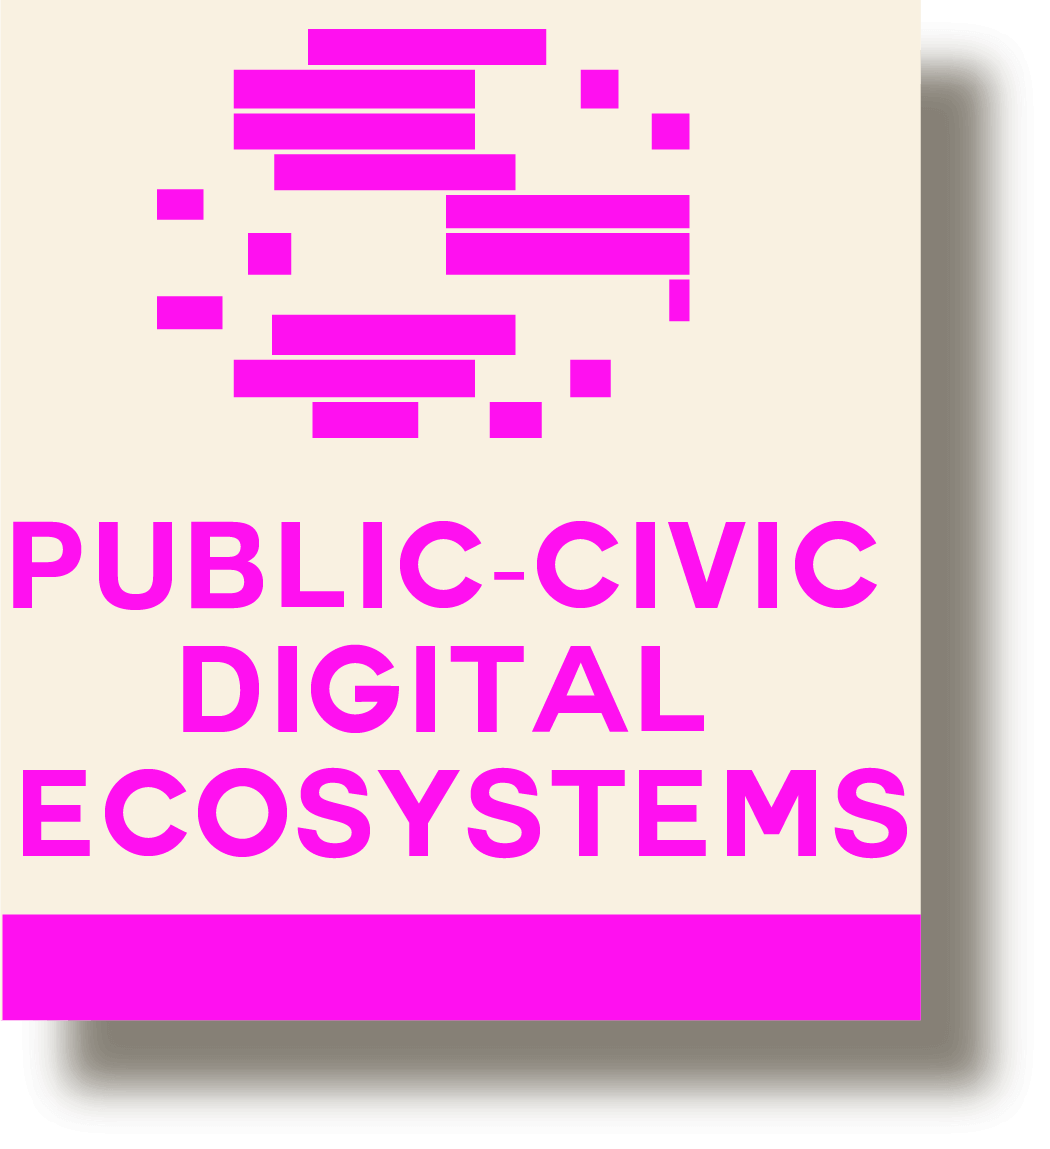 Digital ecosystems